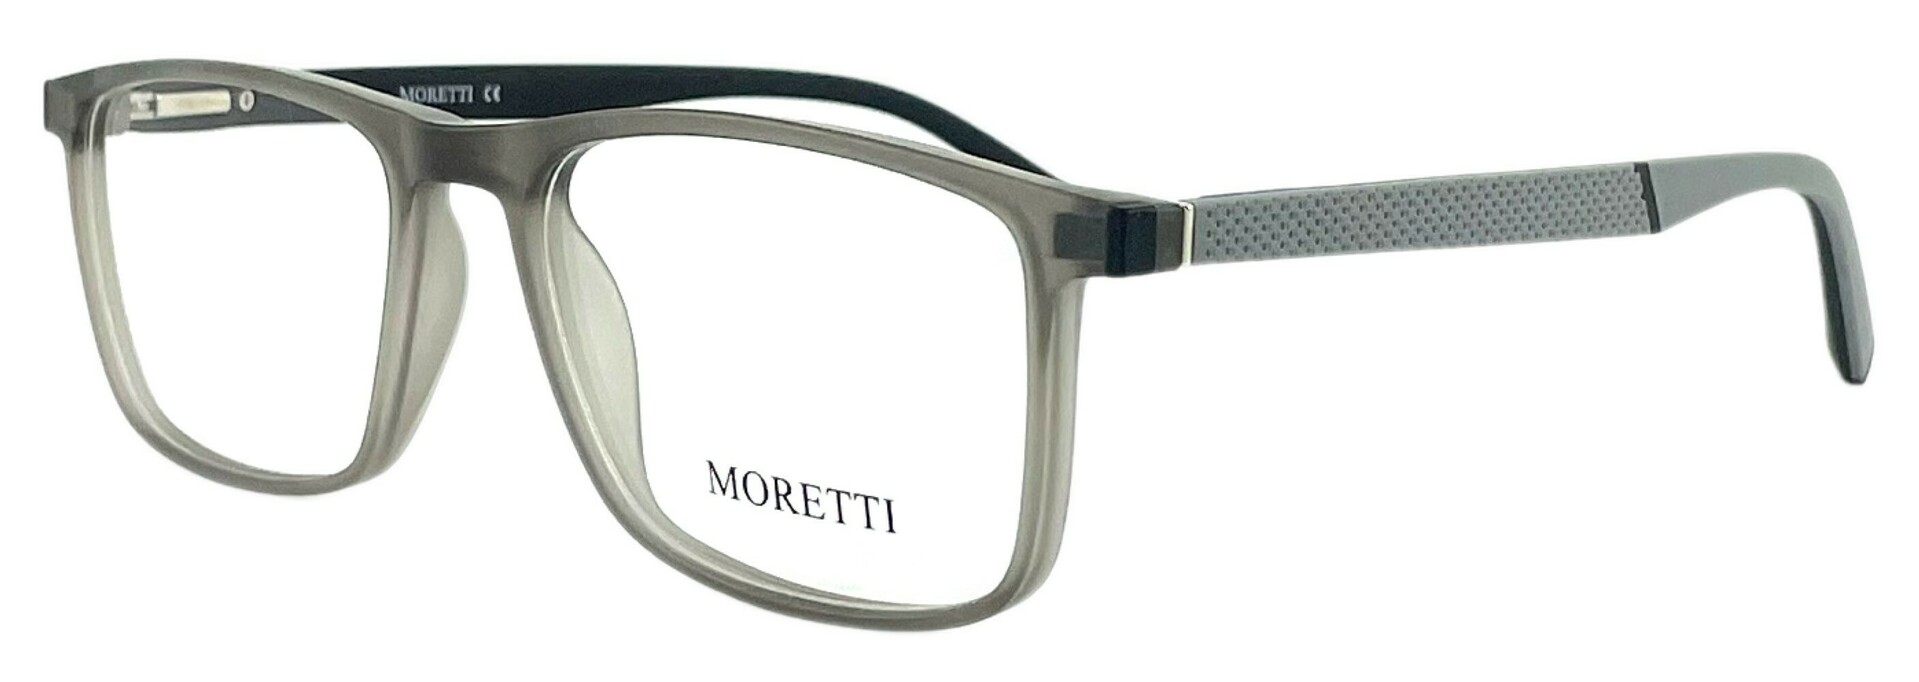 Moretti 80101 C5 2